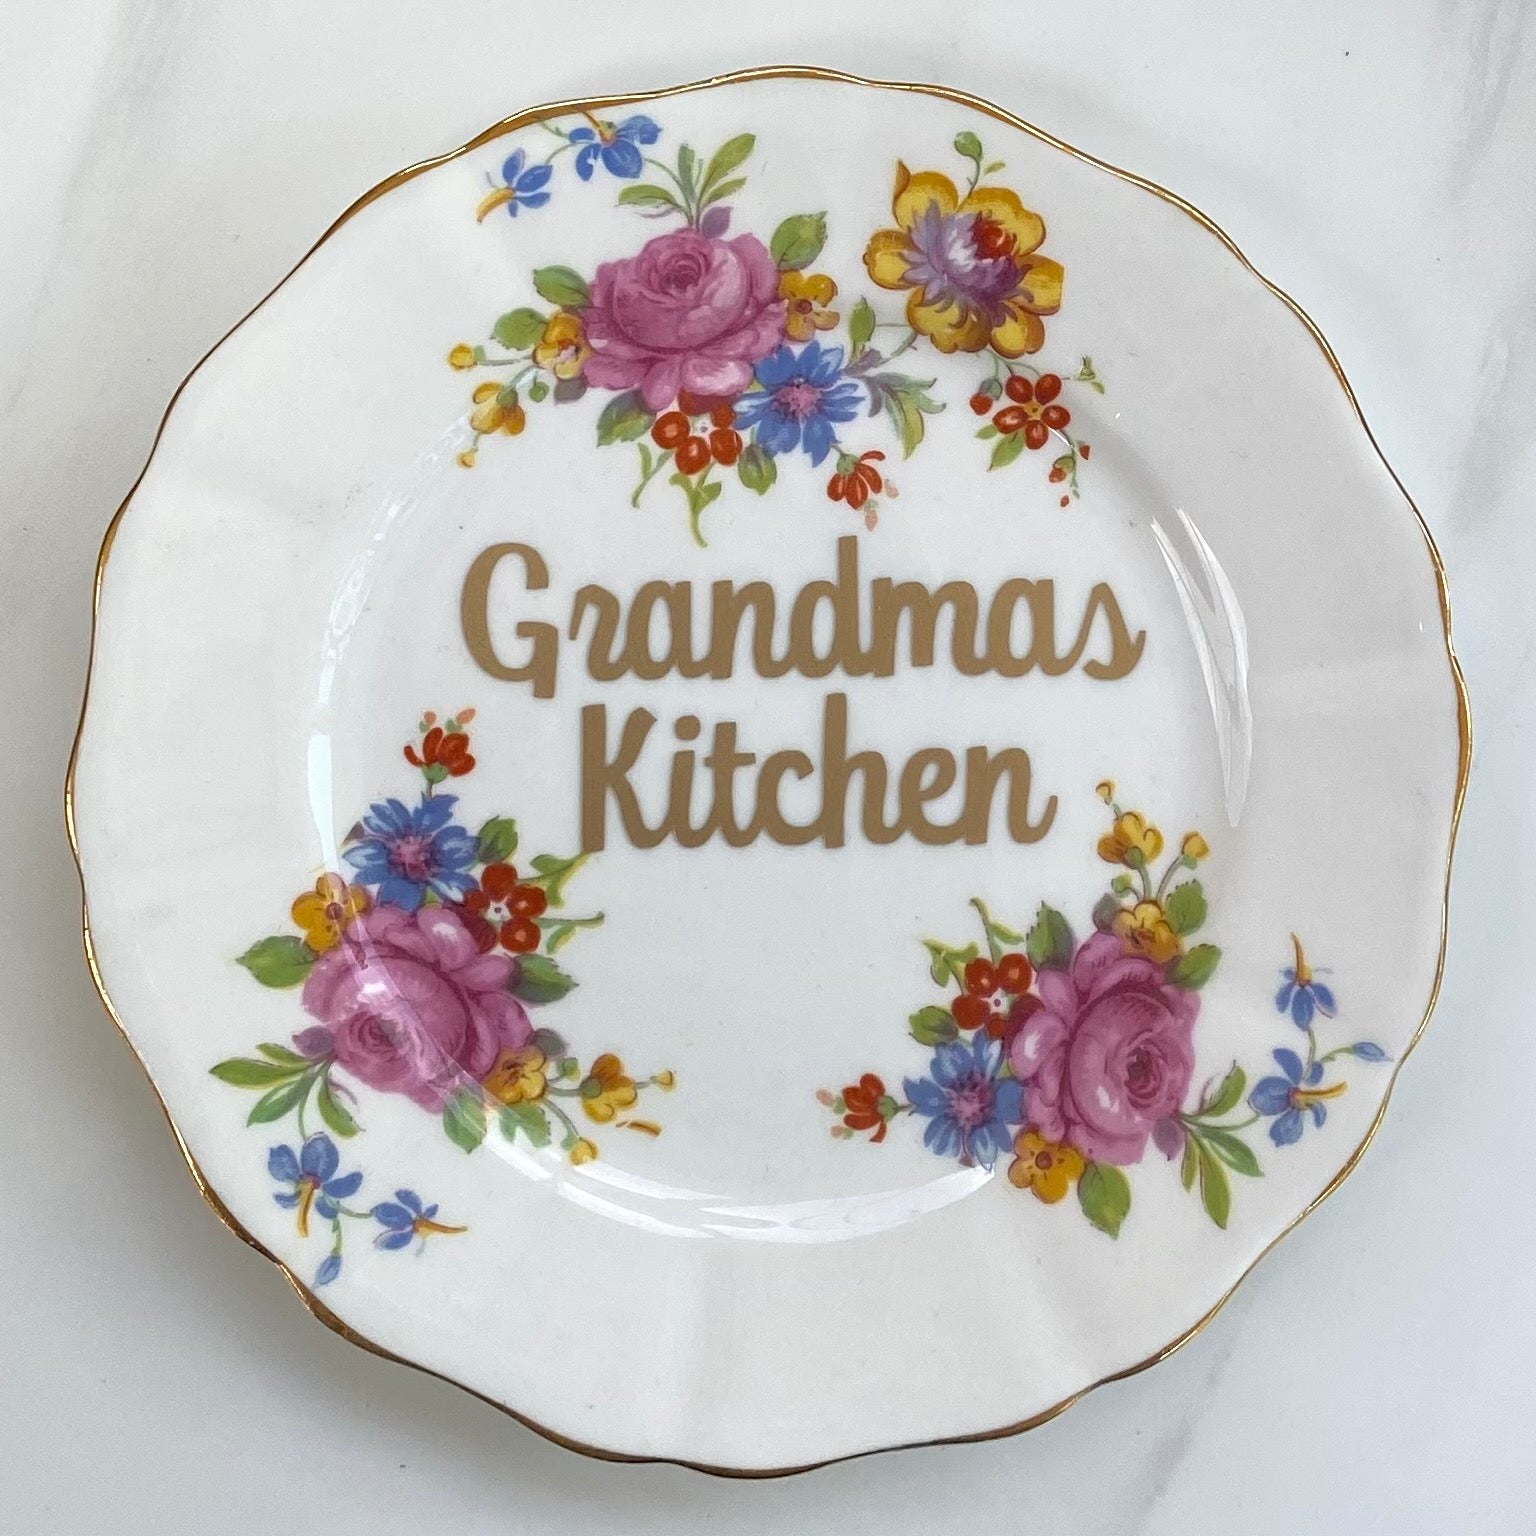 ‘Grandma’s kitchen’ quote on plate